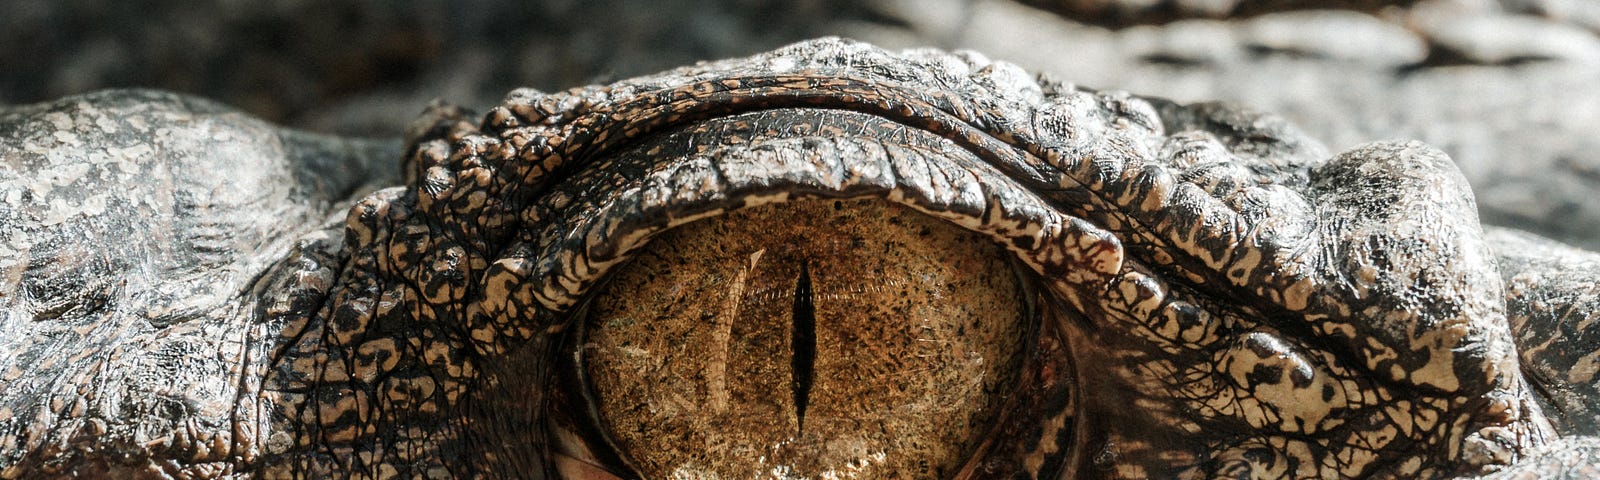 Reptile eye in close-up.